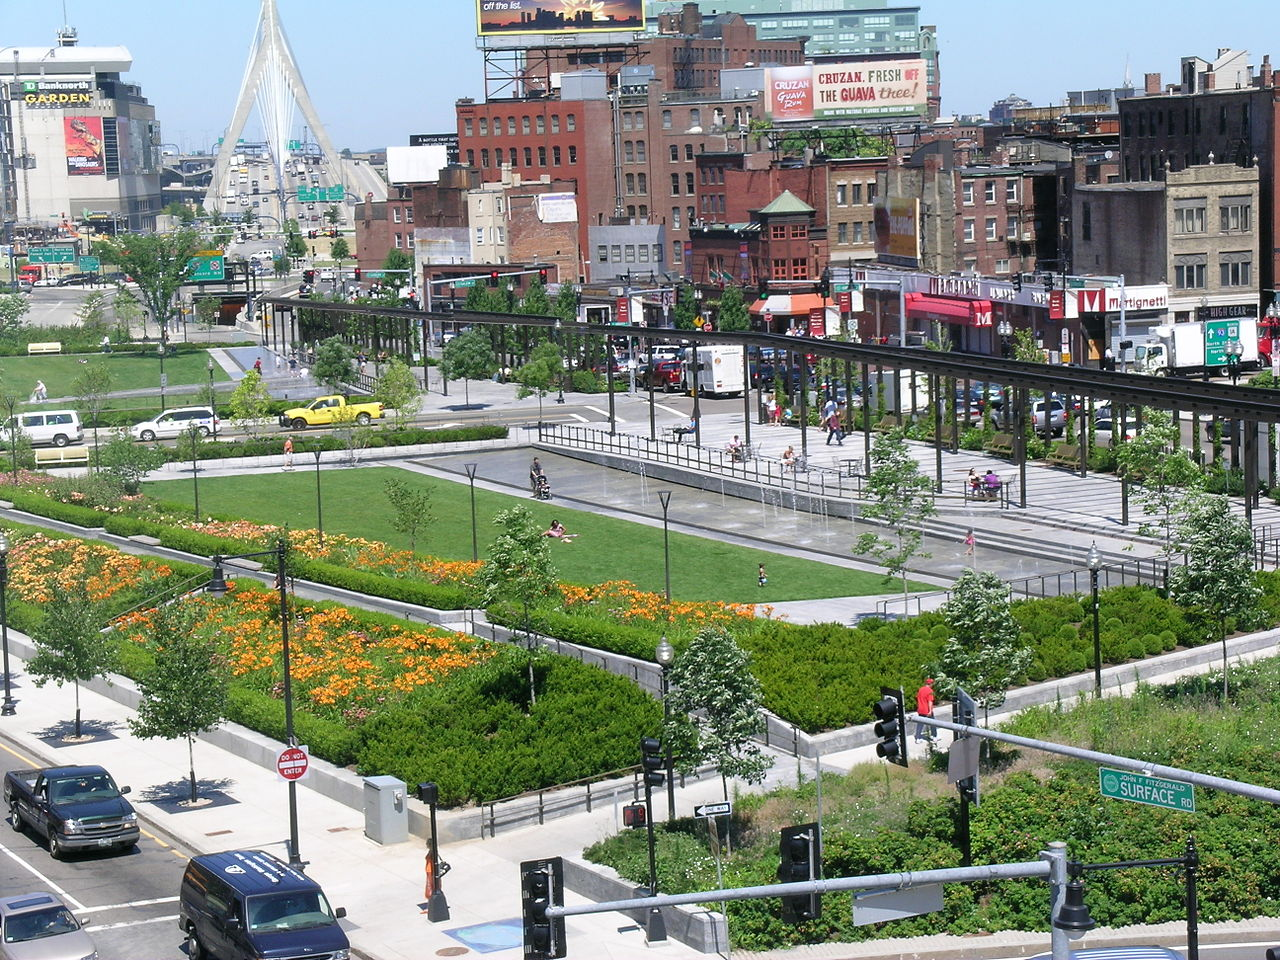 visit Boston: The Greenway